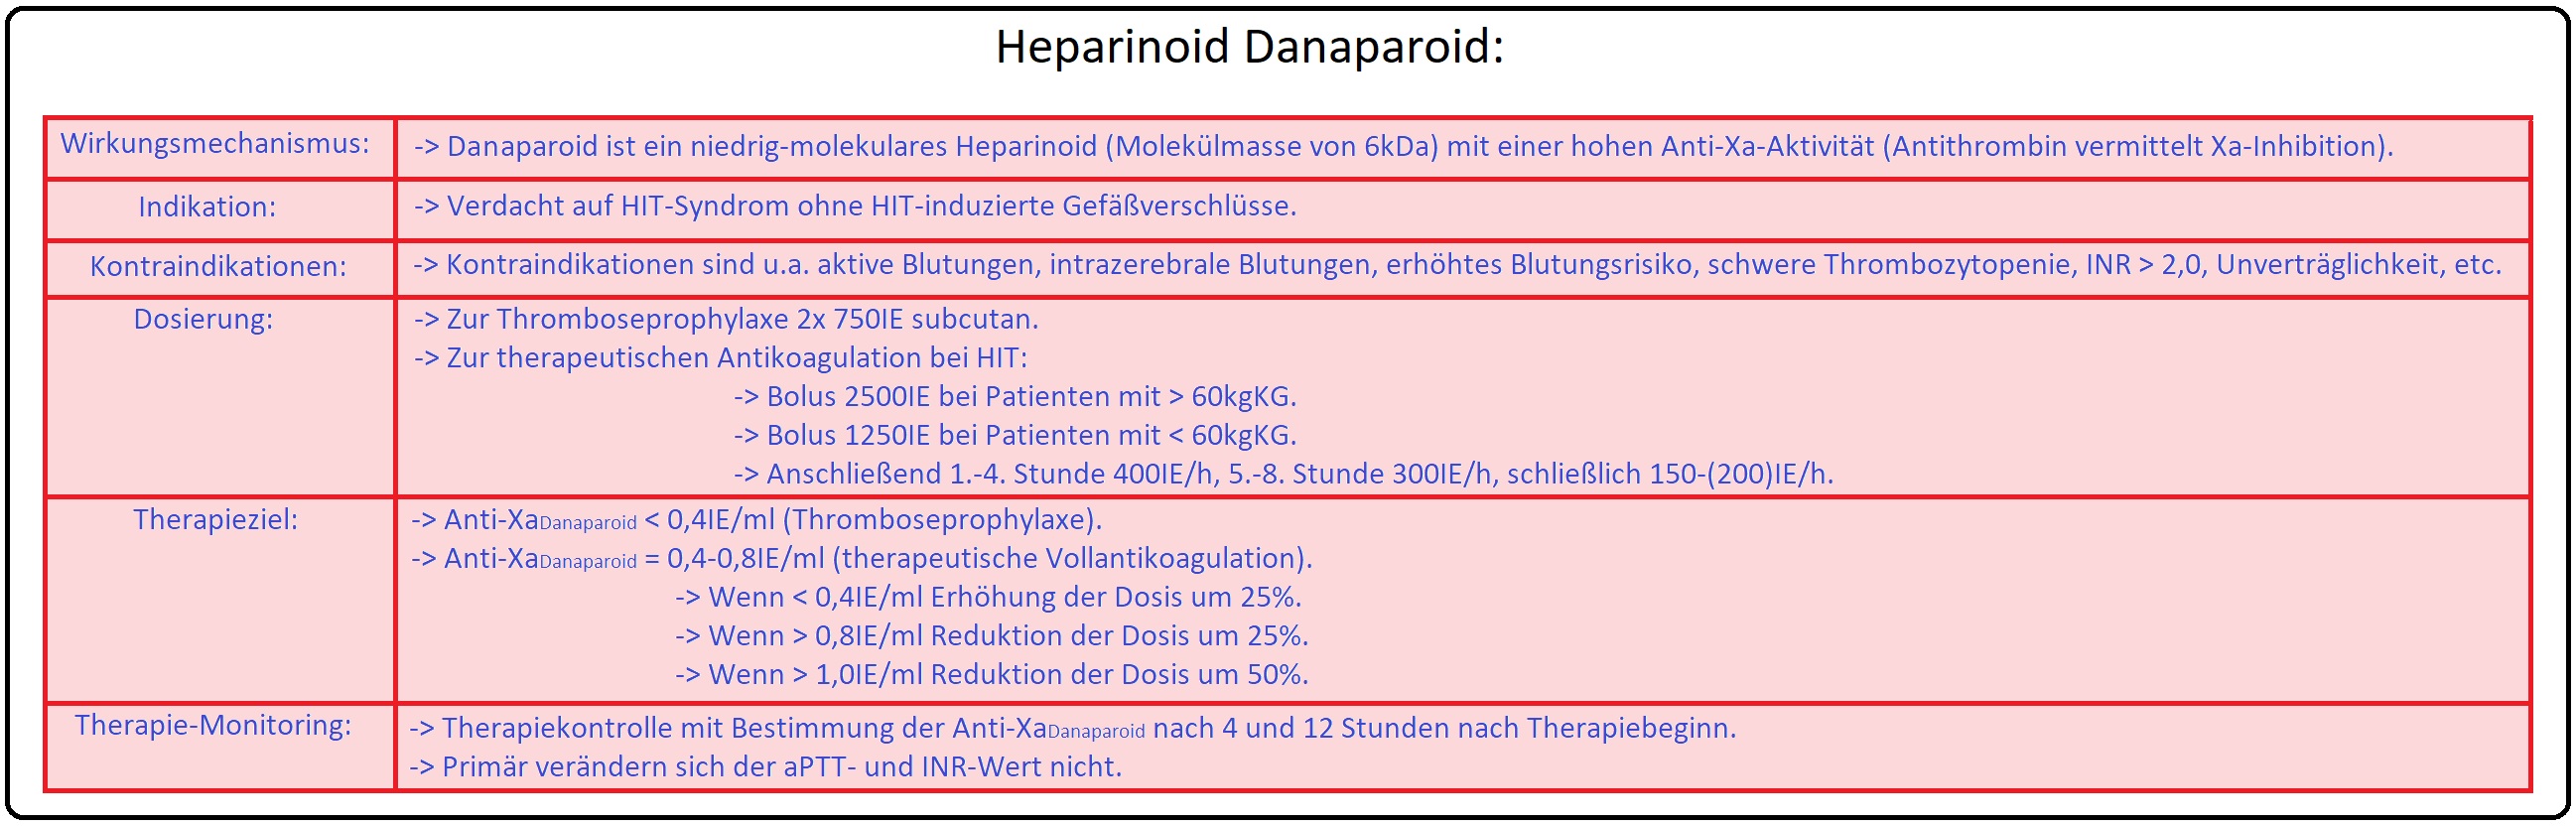 143 Heparinoid Danaparoid